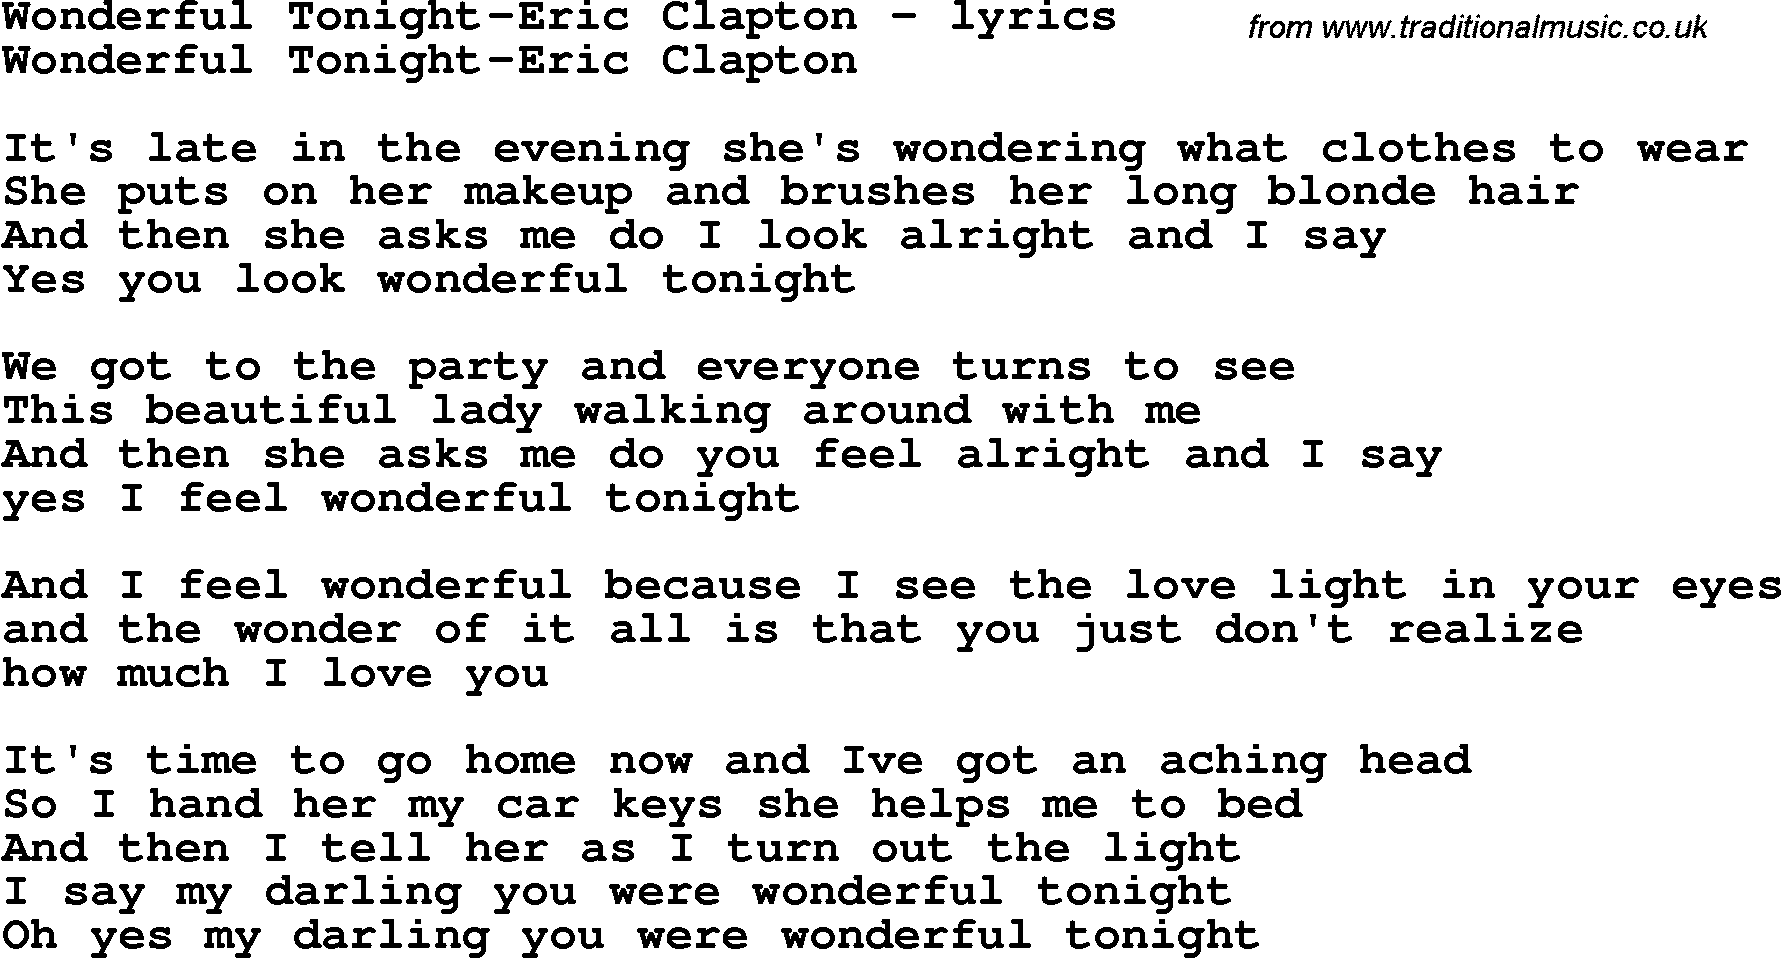 Love Song Lyrics for: Wonderful Tonight-Eric Clapton